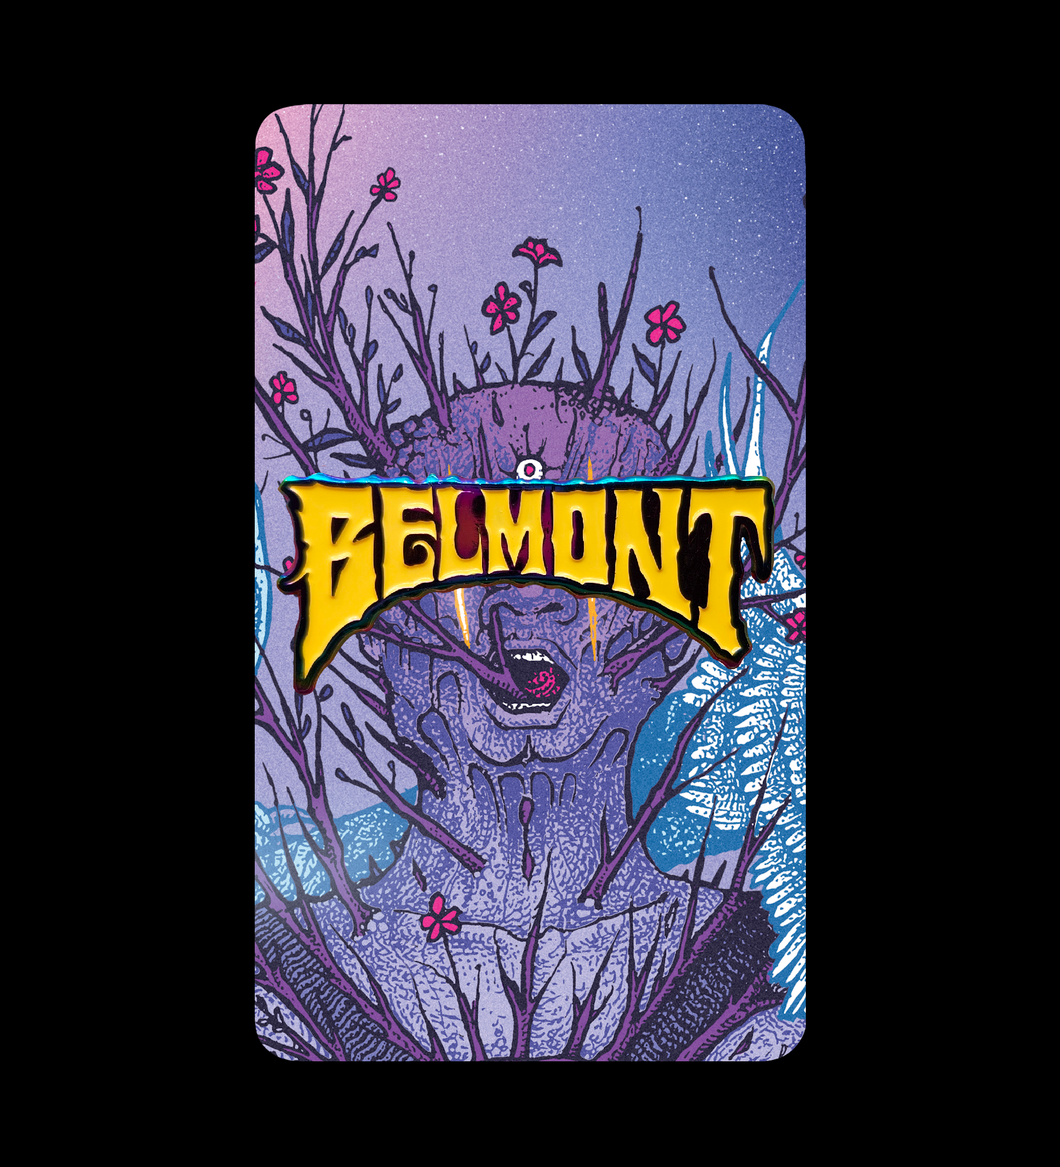 Belmont 